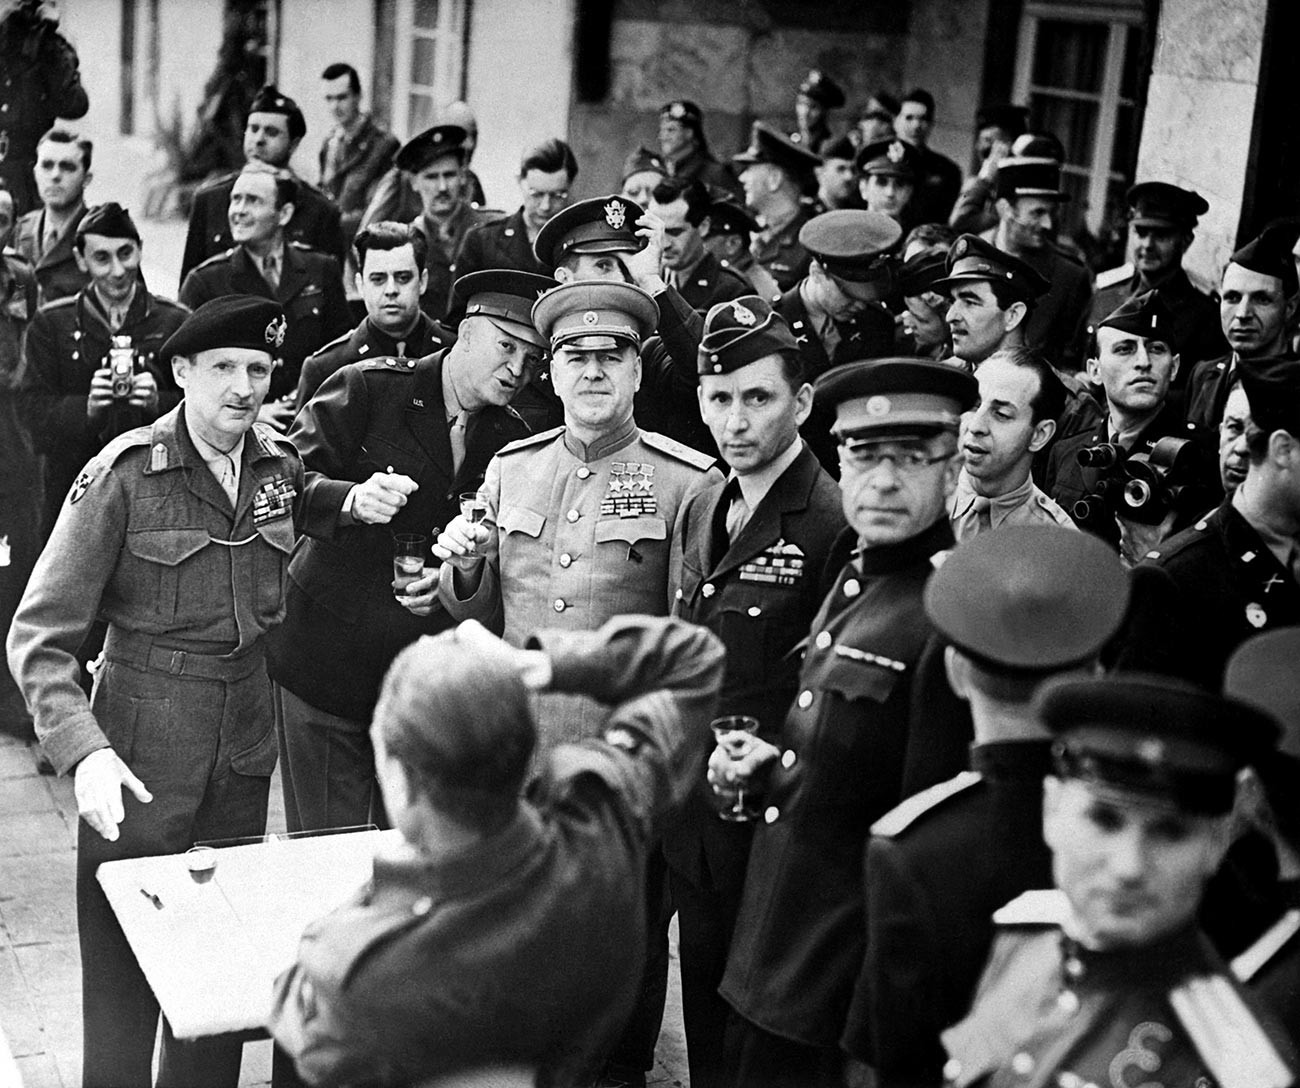 Britanski feldmaršal Bernard Montgomery (lijevo s beretkom) nagrađen Ordenom pobjede 5. lipnja 1945. Desno od Montgomeryja su američki general Dwight Eisenhower i sovjetski maršal Georgij Žukov, također nagrađeni Ordenom pobjede. Desno od Žukova je britanski maršal RAF-a, sir Arthur Teder.